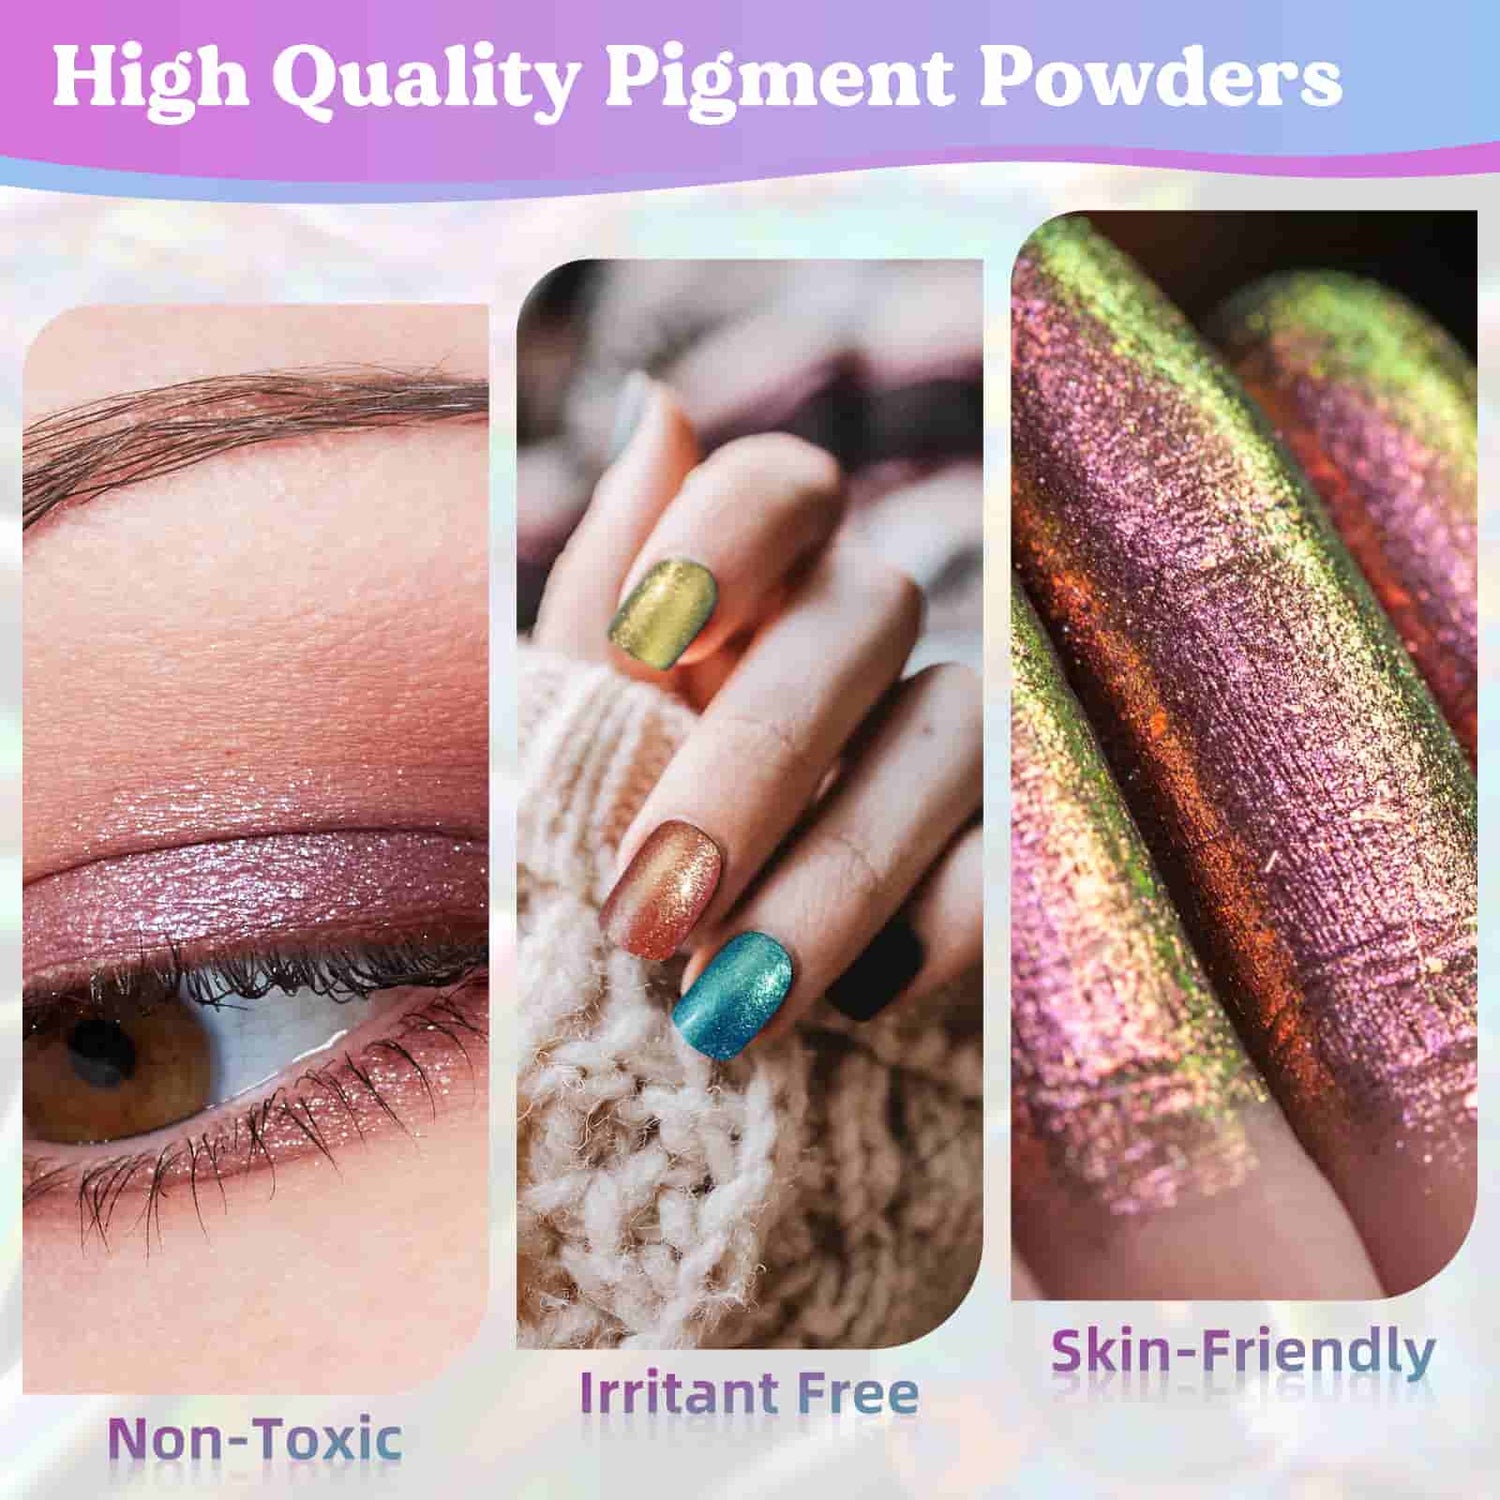 10 Colors Mica Powder For Resin Pigment Powder Chameleon-Powder